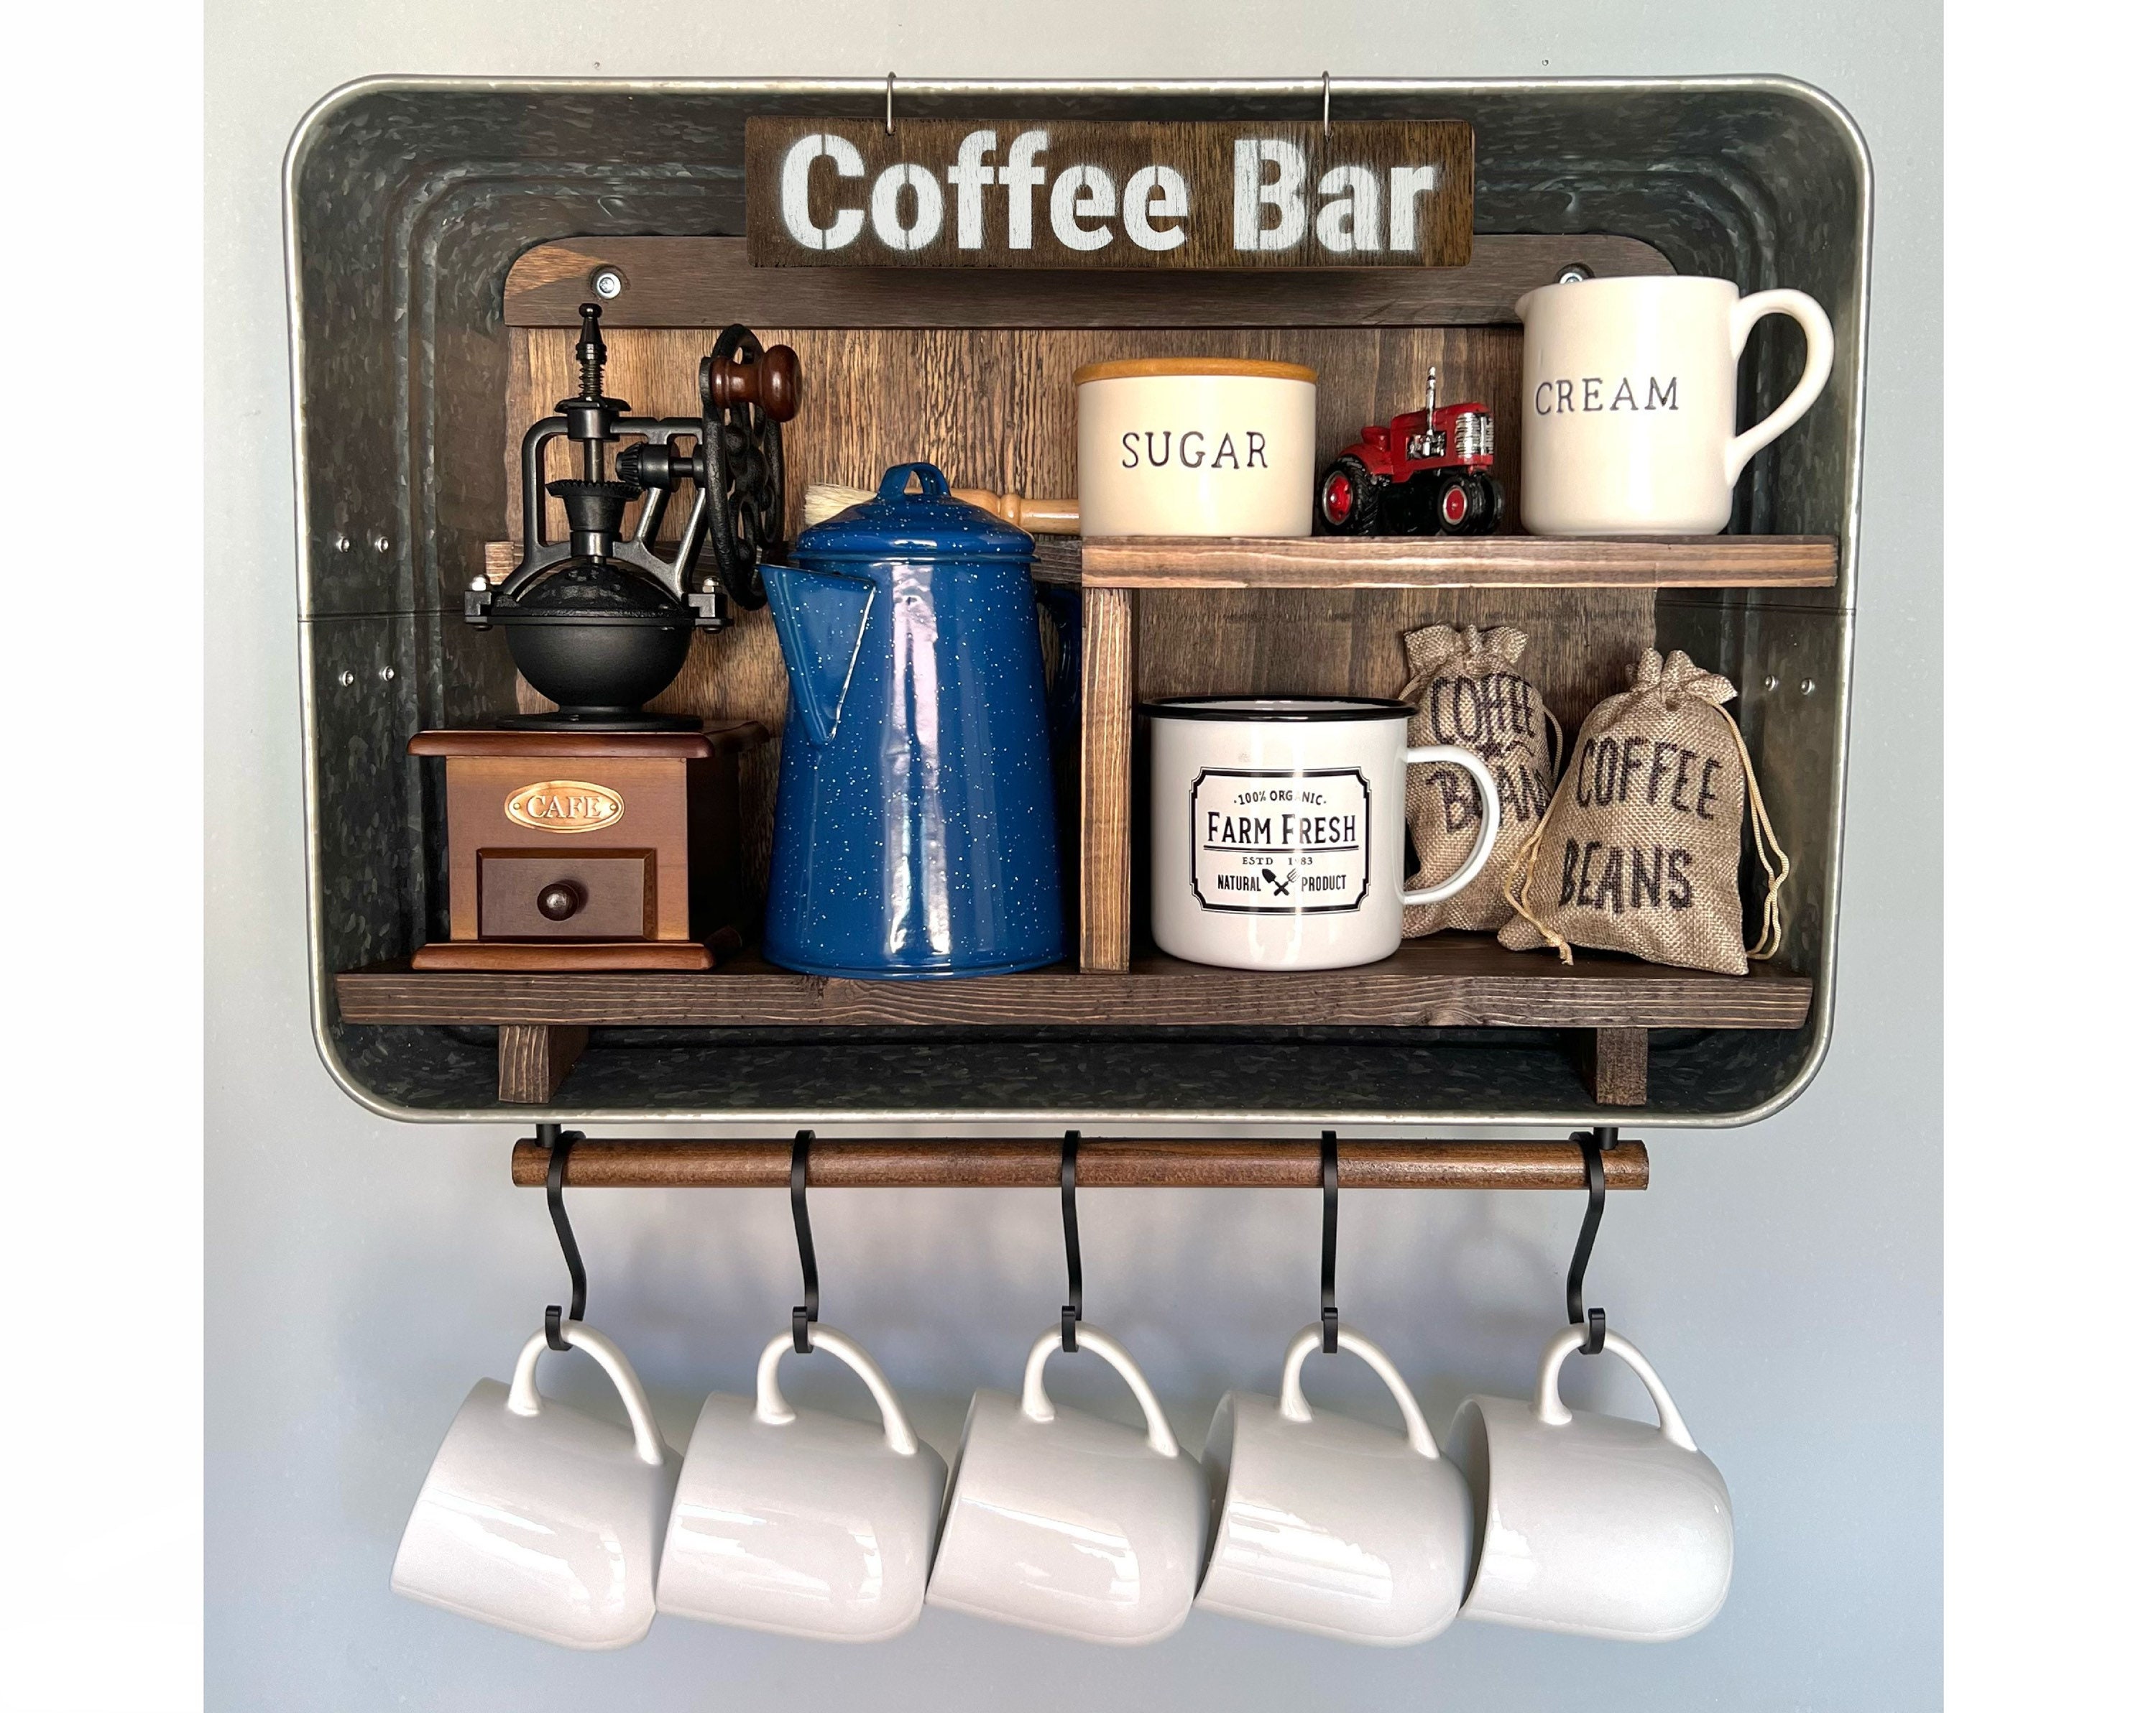 Coffee shop accessories in shelf Stock Photo by ©Tzido 168557254